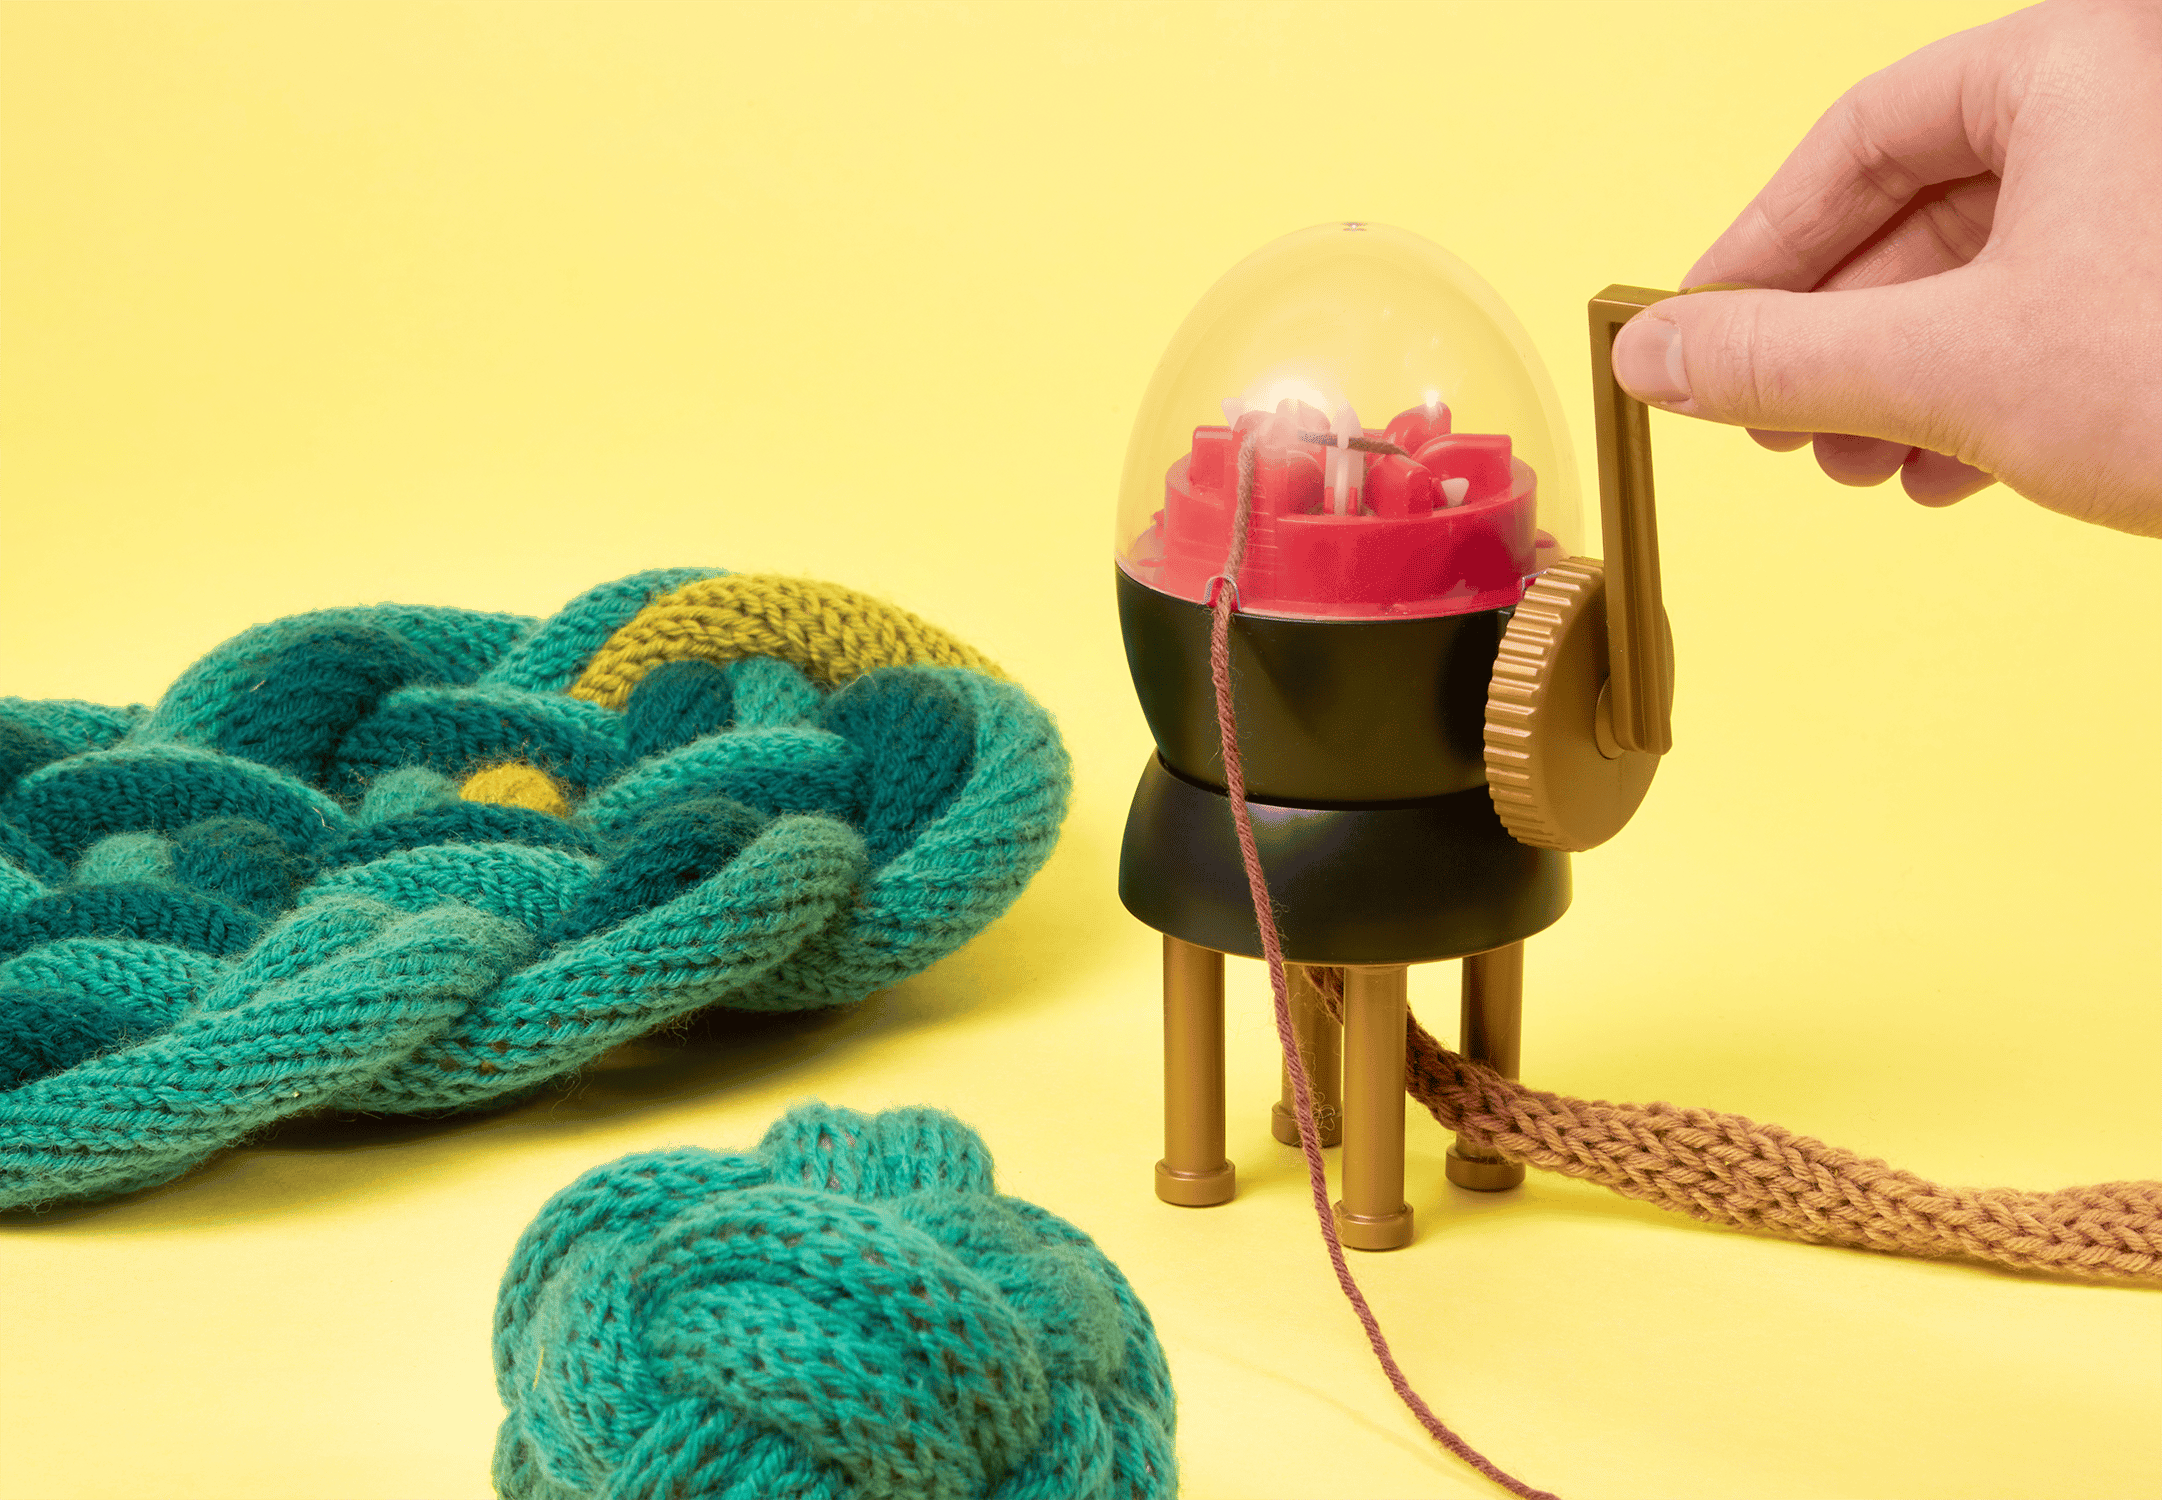 880 2 addiEi mini Strickmaschine knitting machine 6 Nadeln neeldes Sideshot1 rgb Yarn Bombing